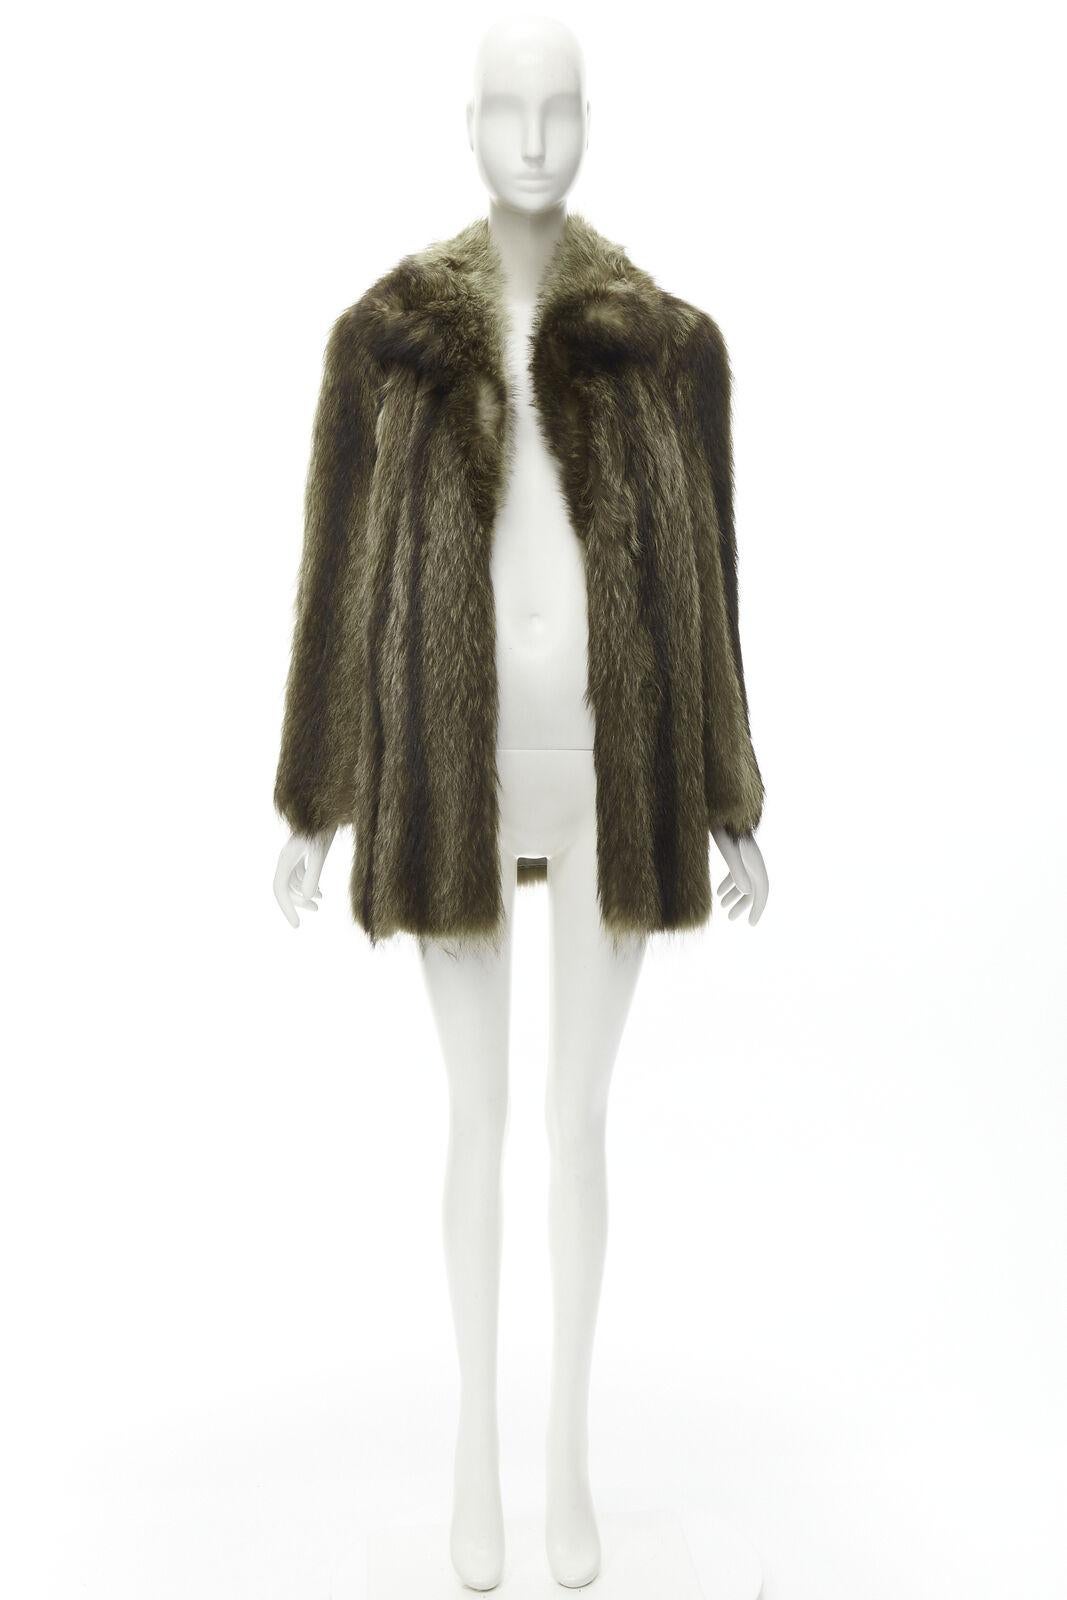 HURTIQ brown fur long sleeve collar hook eye jacket coat For Sale 6